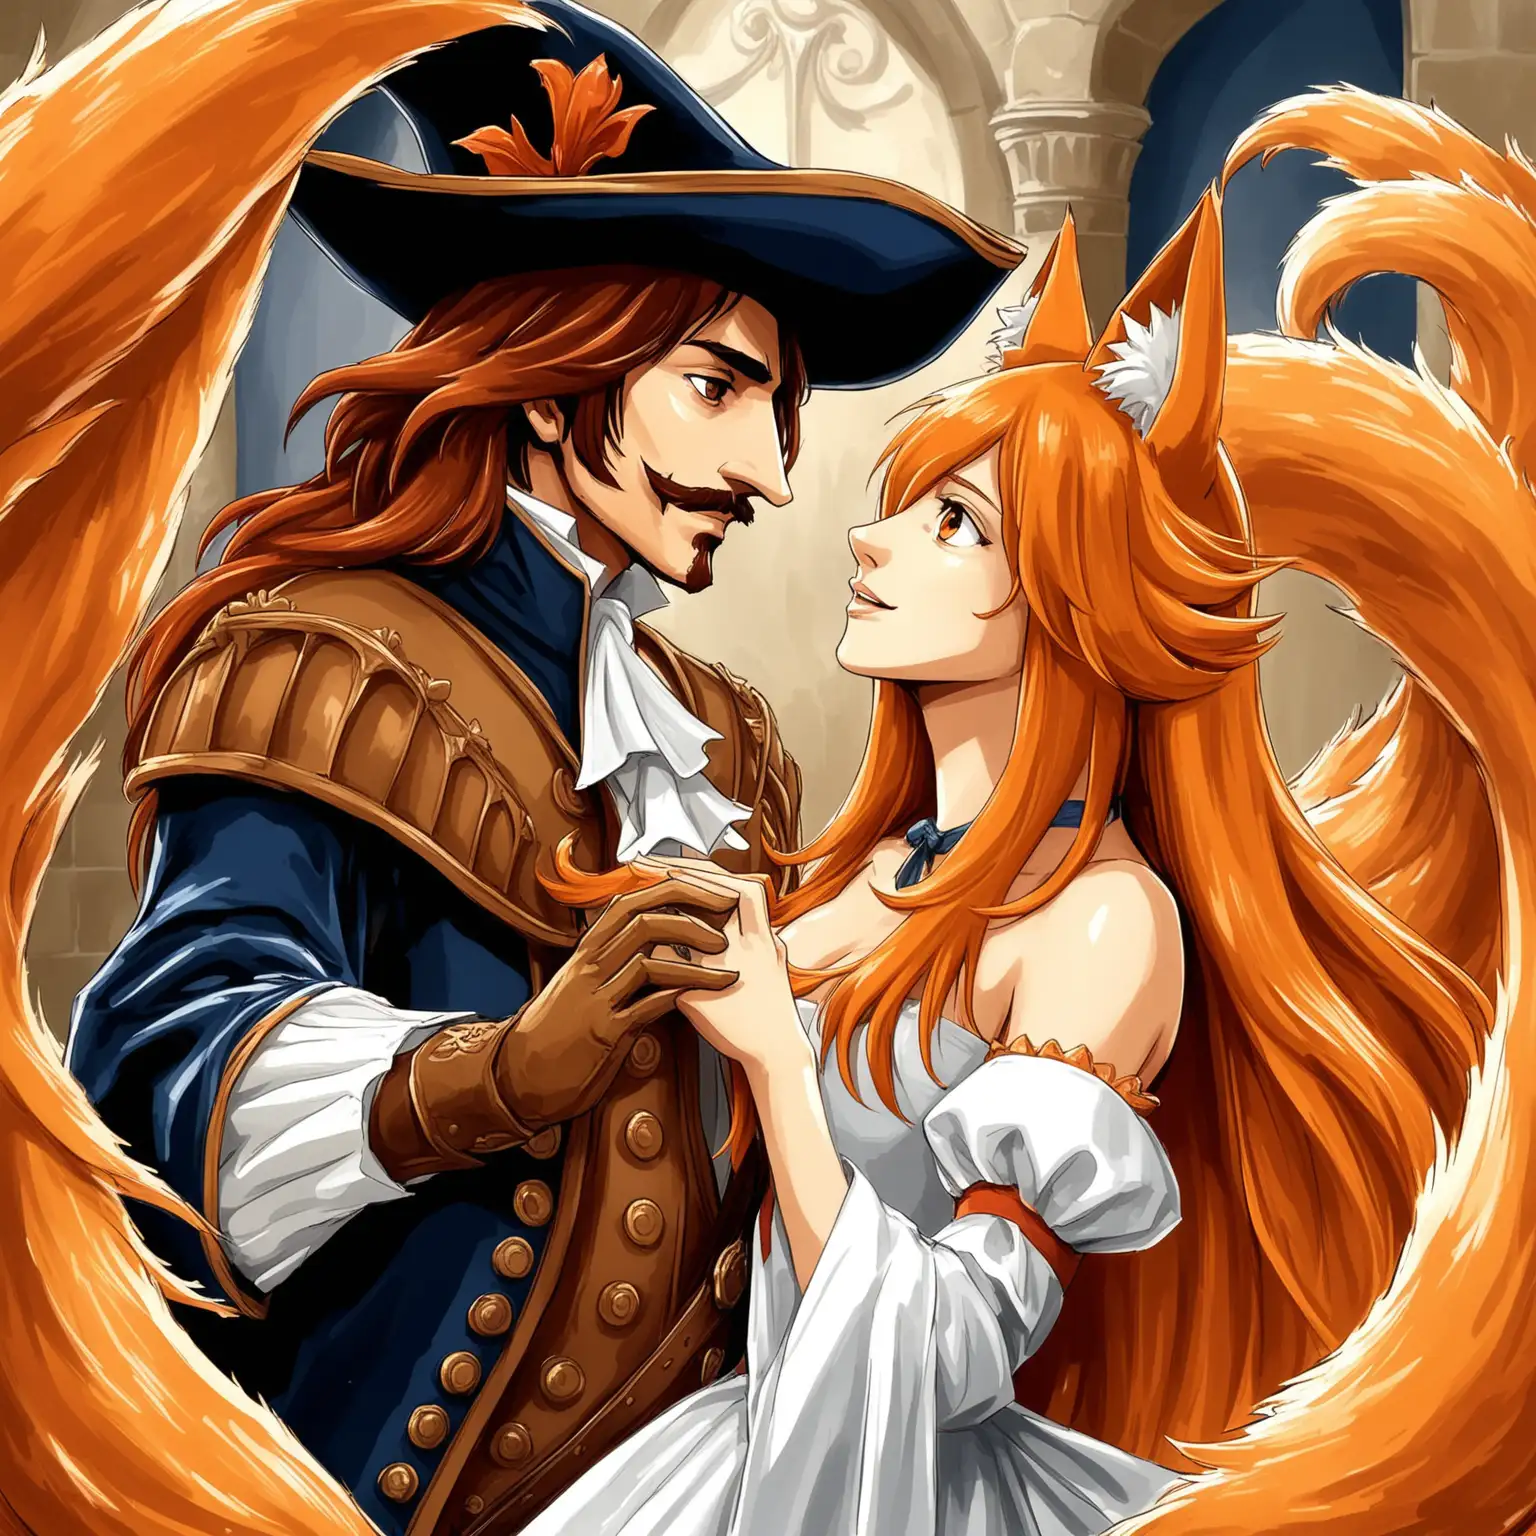 Cyrano de Bergerac Wooing a Stunning 9Tailed Kitsune with Orange Hair